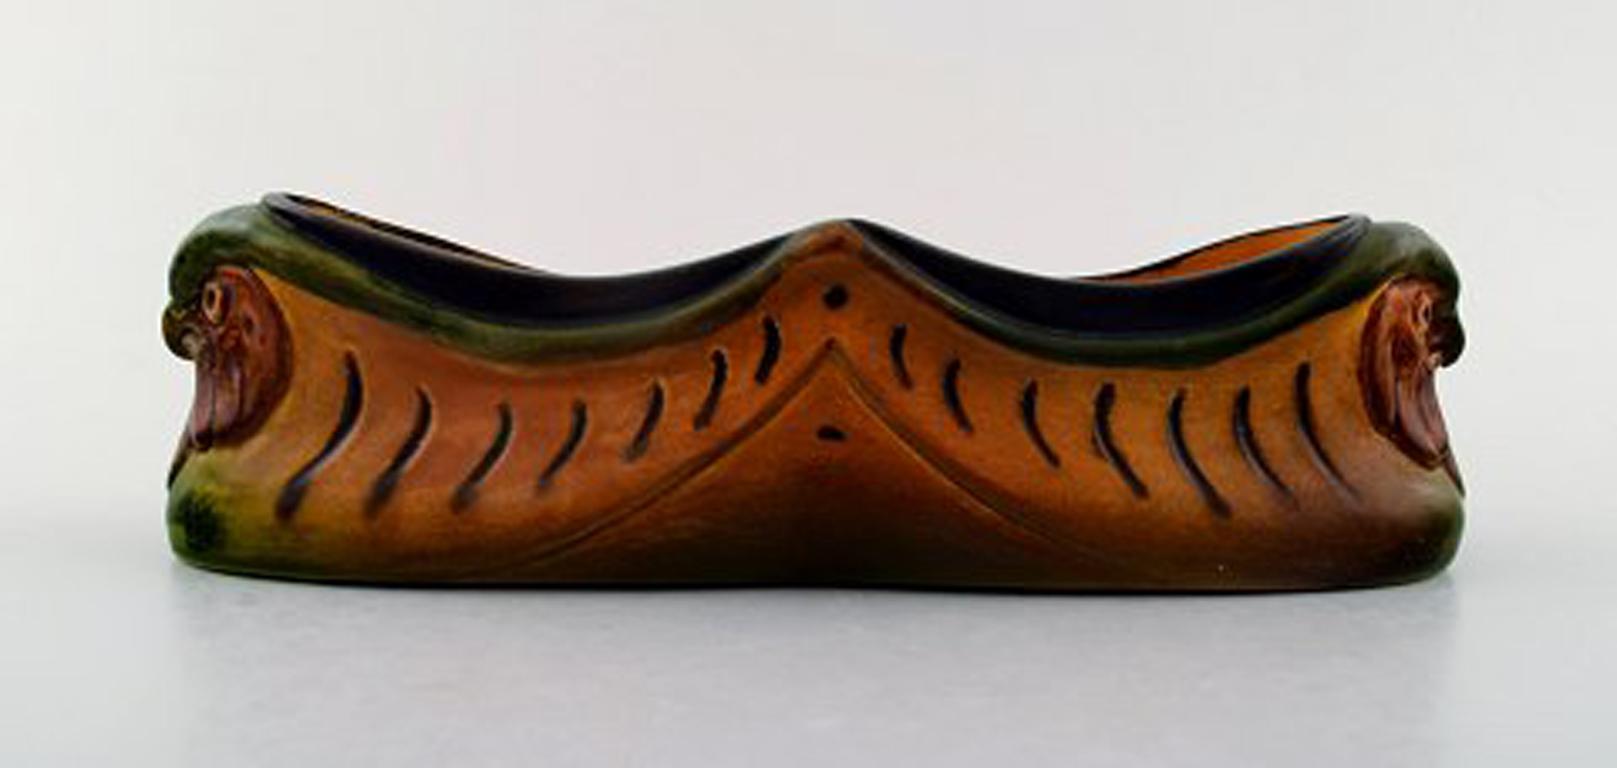 Rare Ipsen's Denmark Art Nouveau ceramic bowl.
Measures: 25 cm x 7 cm.
In perfect condition.
Stamped.
Model number 348 ?.